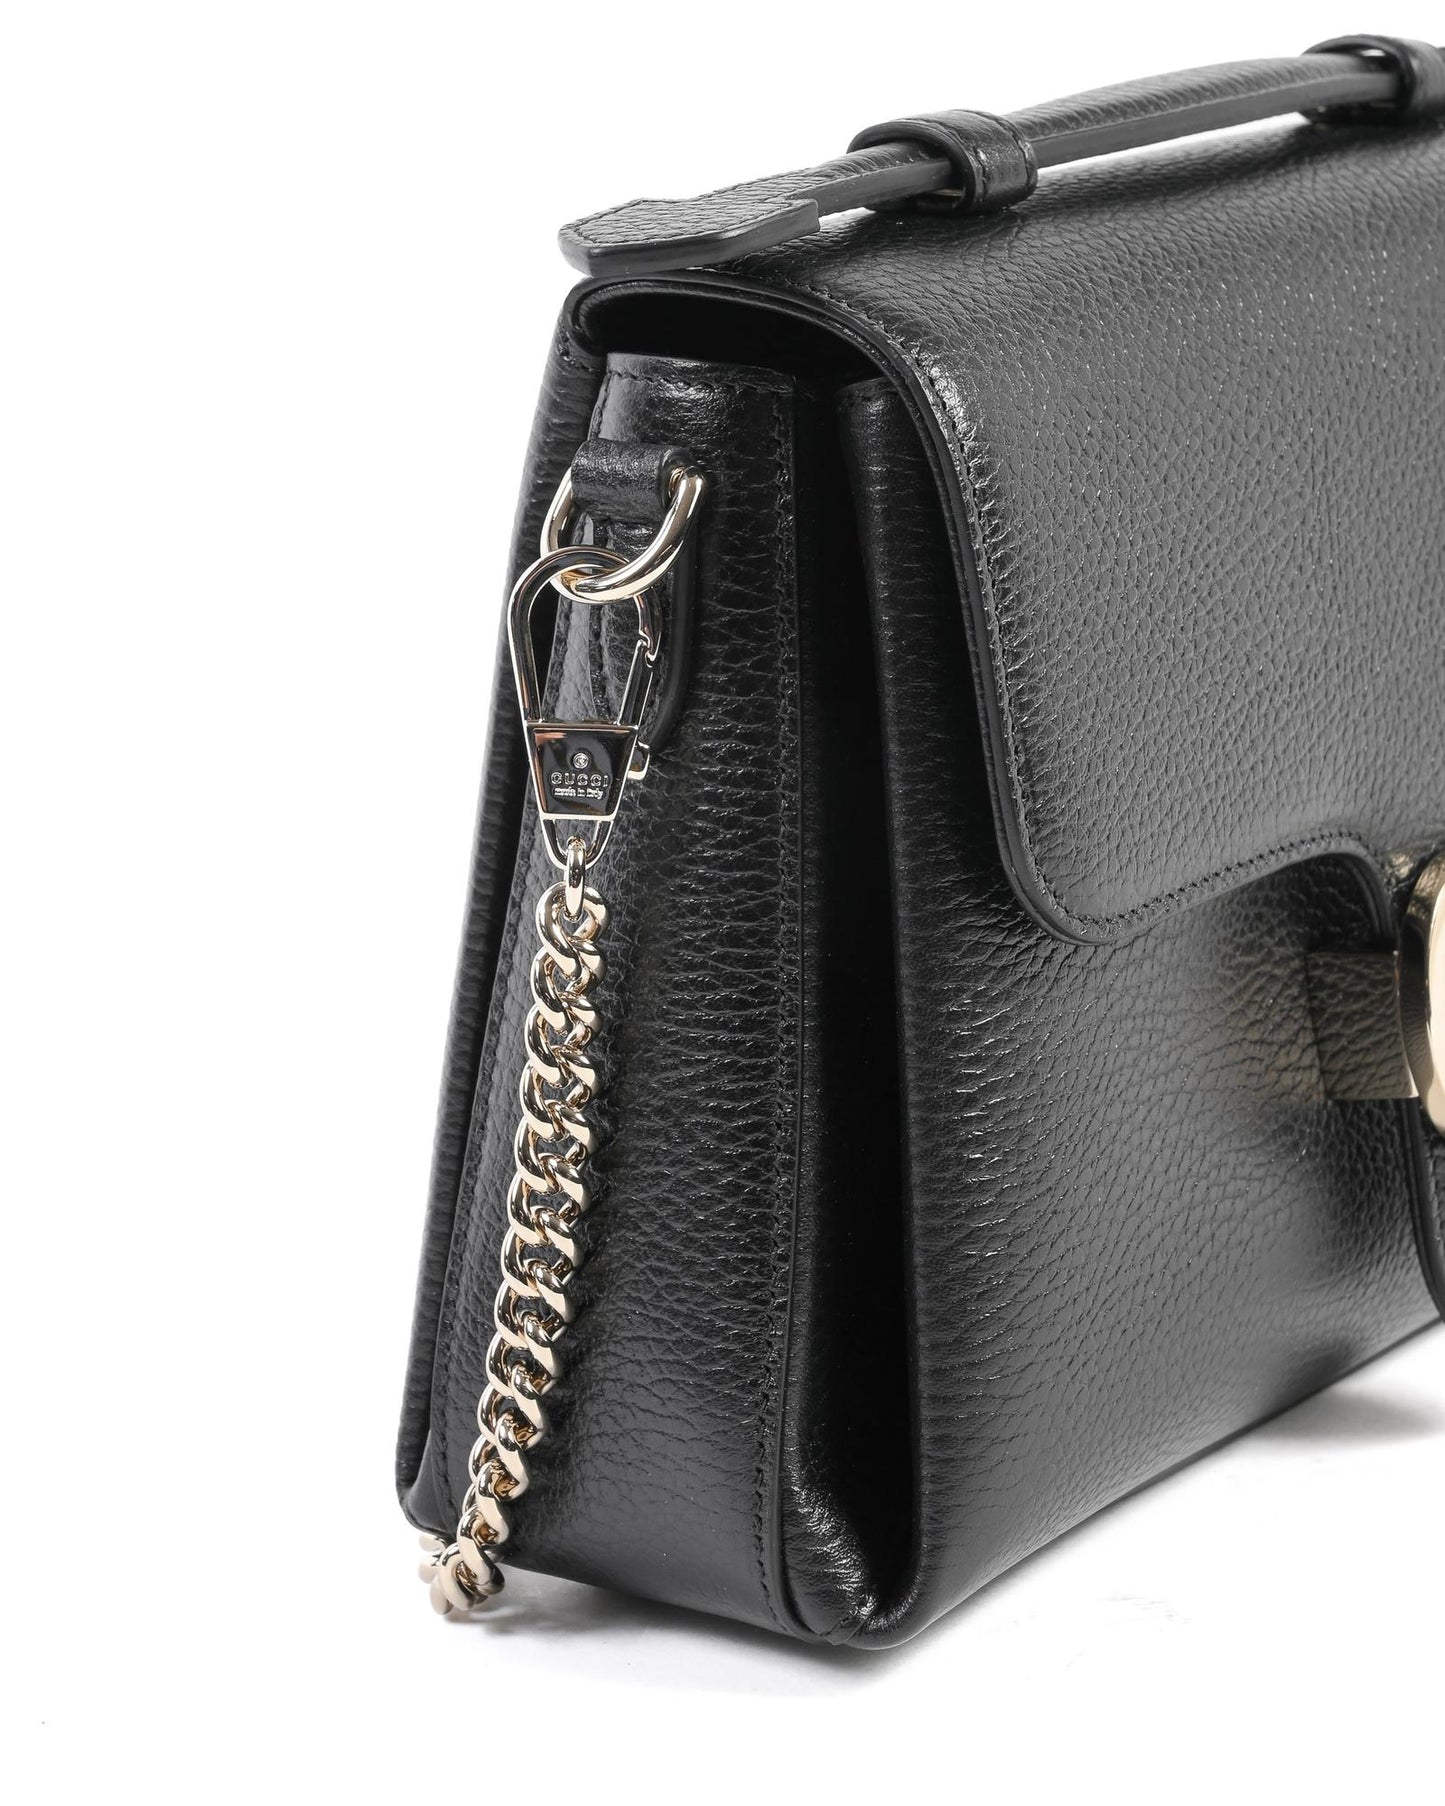 Gucci Women's Leather Interlocking Chain Bag in Black